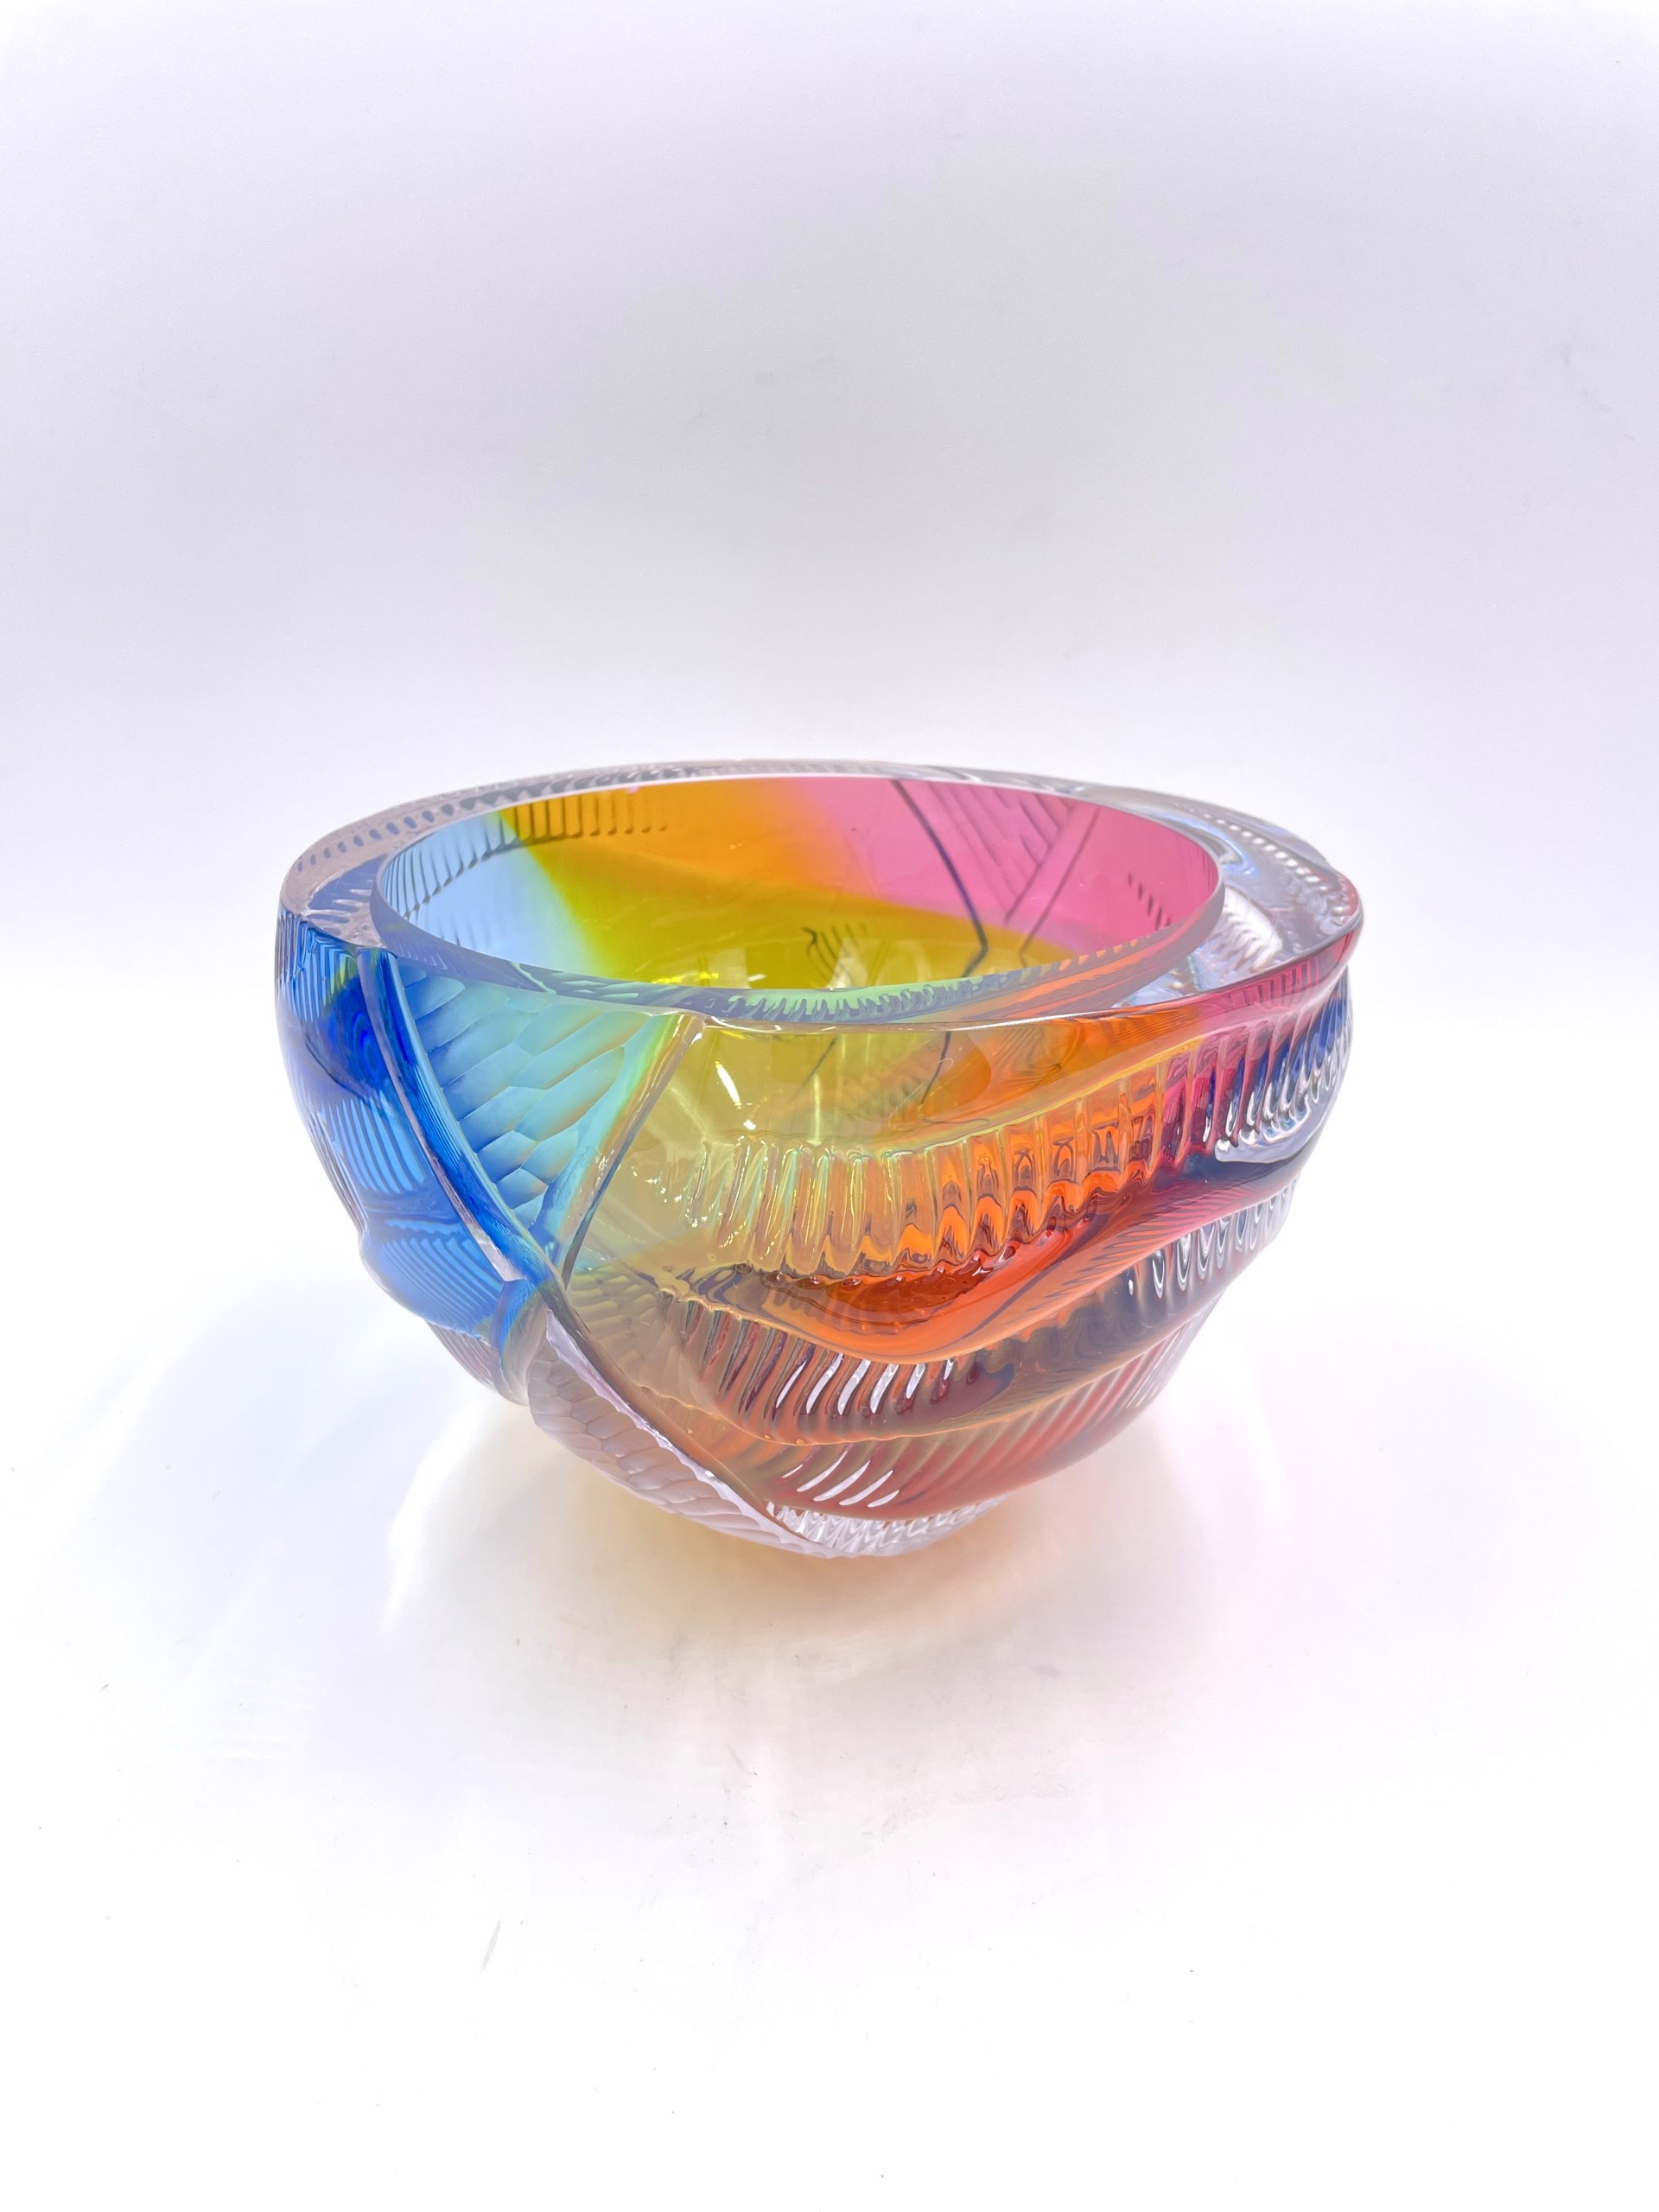 Rainbow's Drum (Texture Bowl) by Leon Applebaum